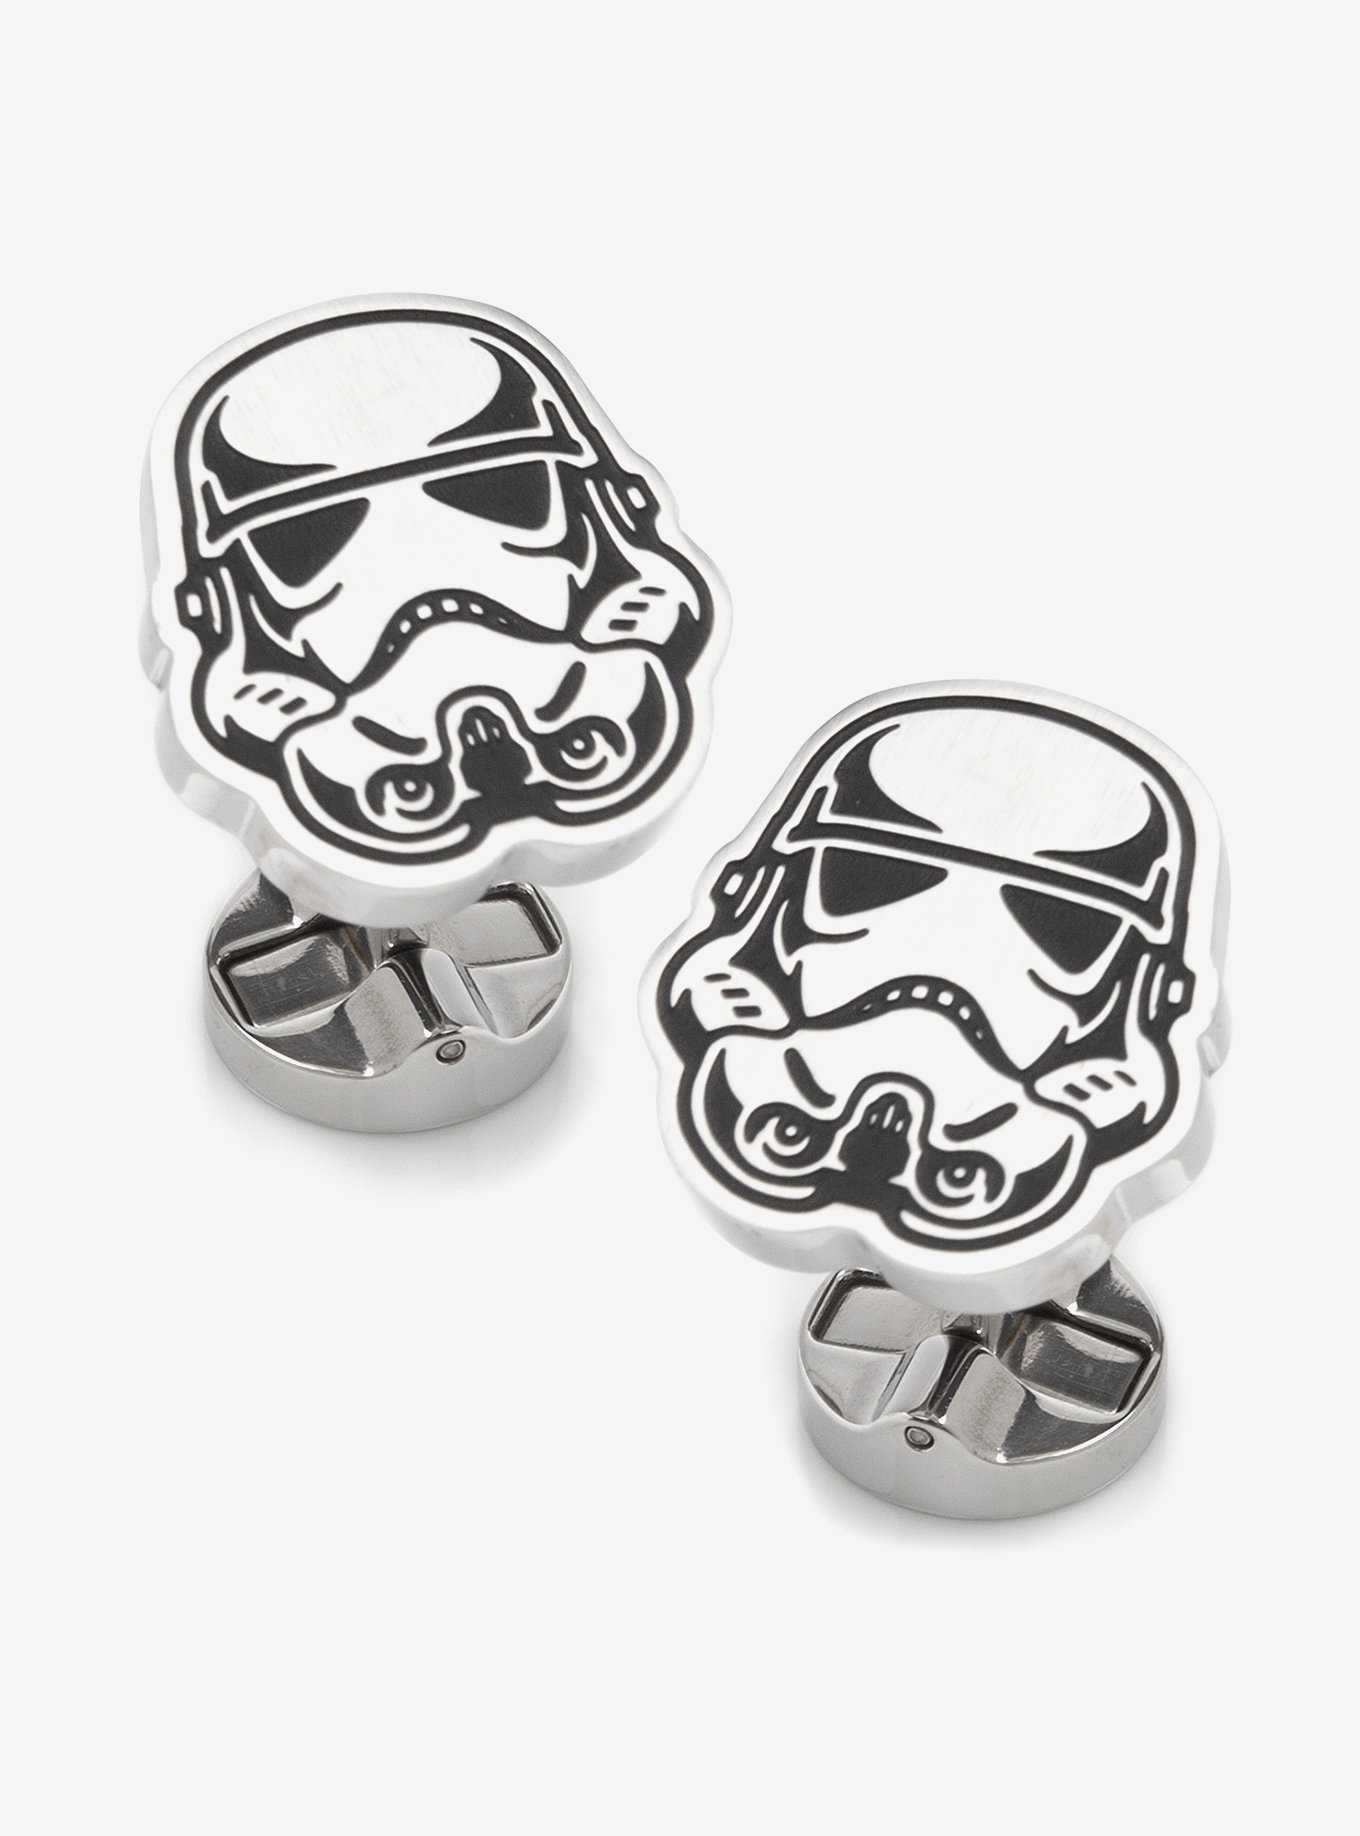 Star Wars Stormtrooper Stainless Steel Cufflinks, , hi-res